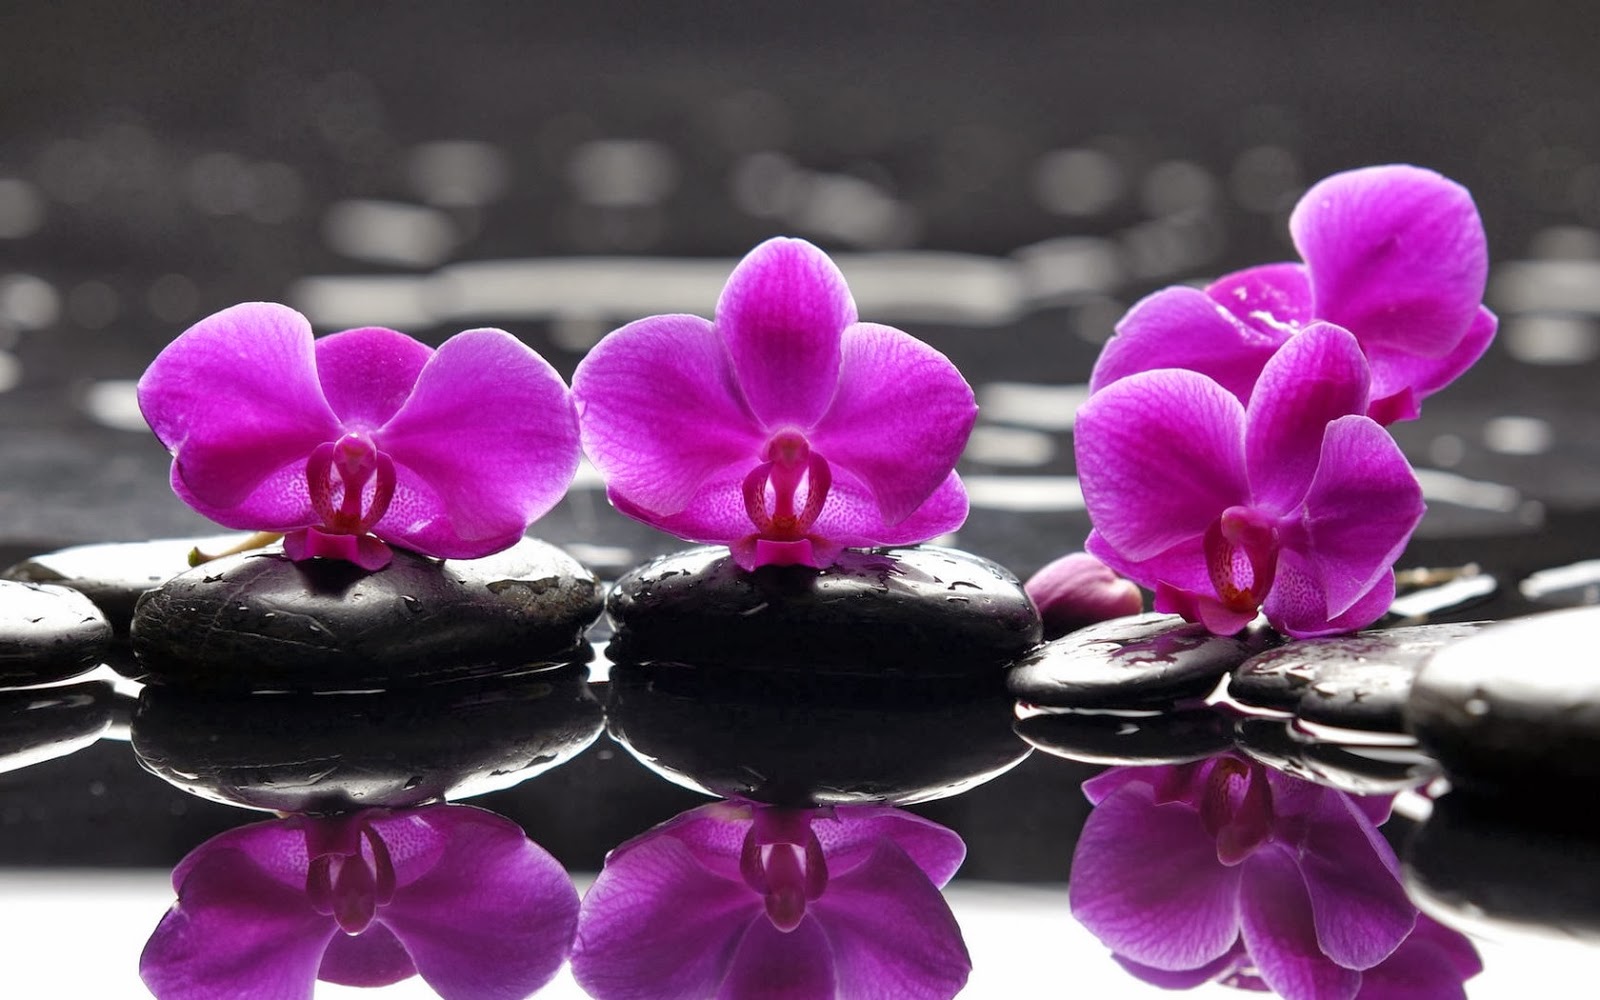  widescreen wallpapers orchids beautiful   beautiful desktop wallpapers